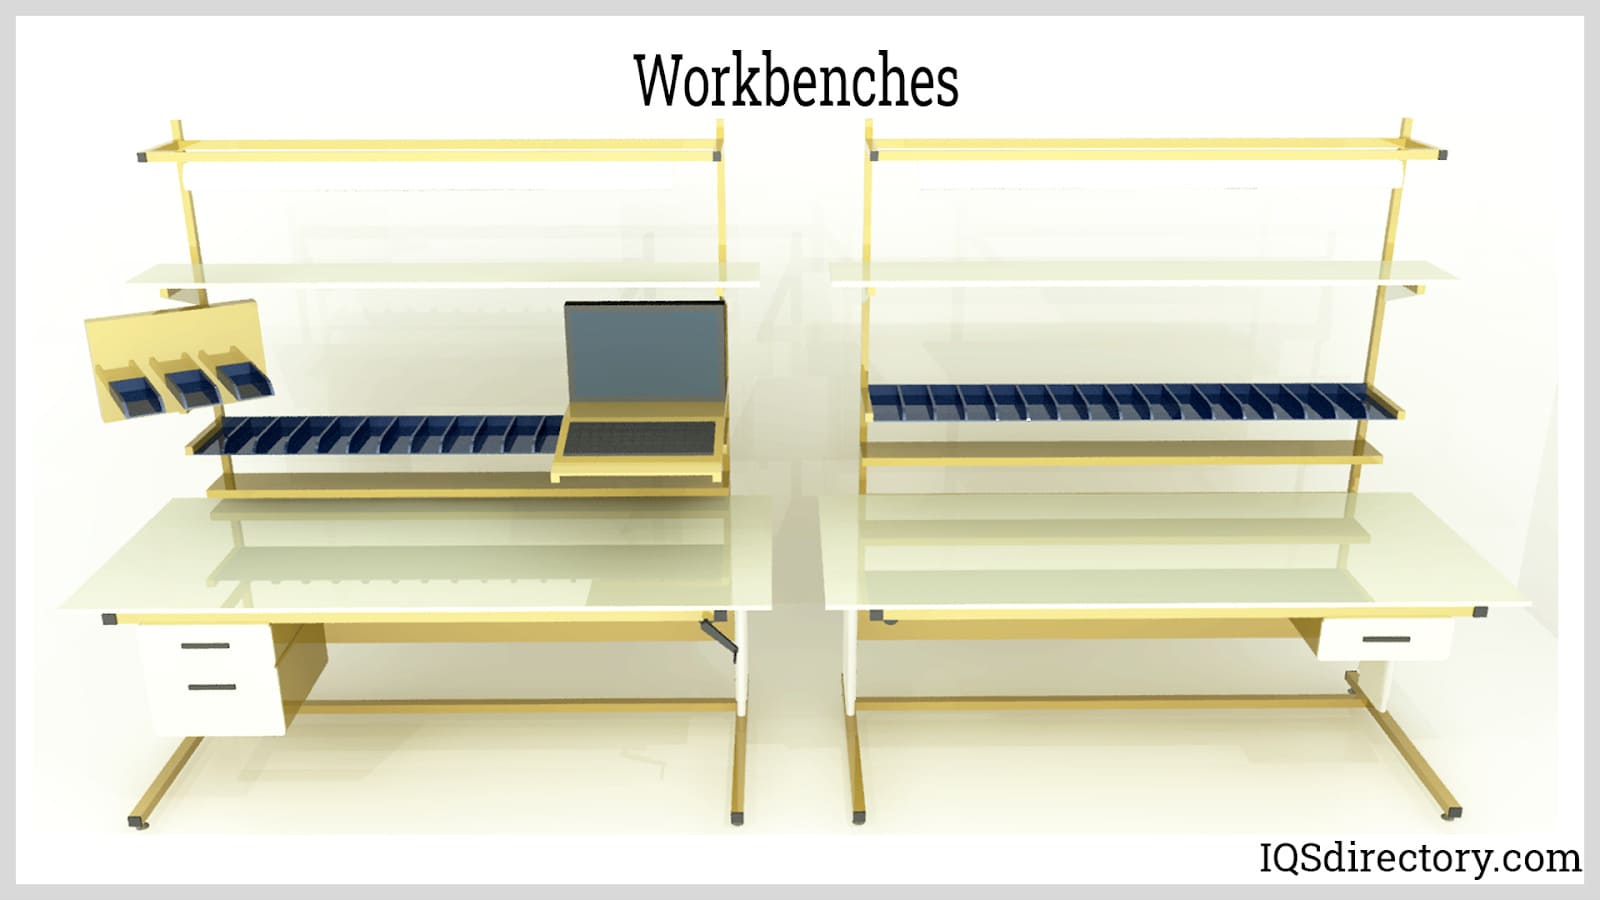 Workbenches